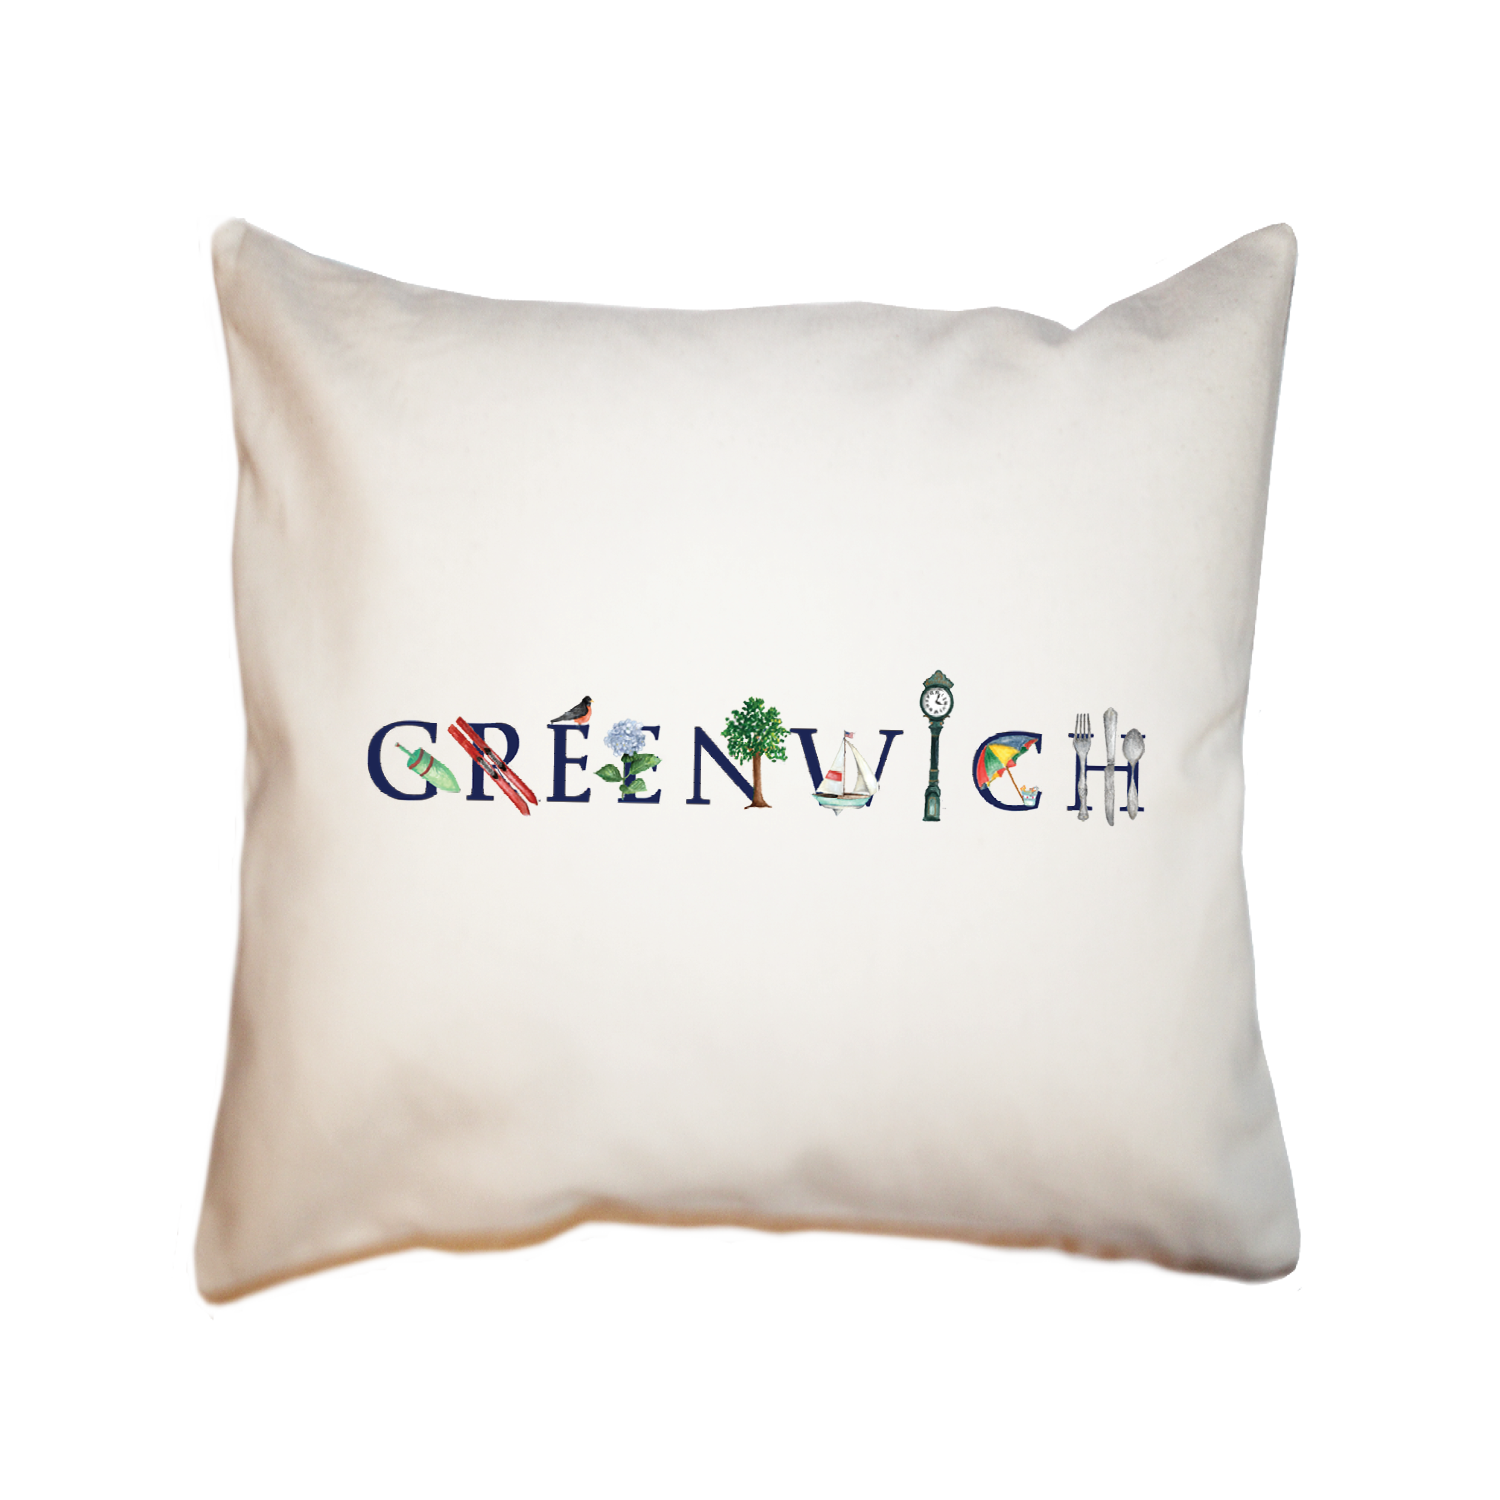 greenwich square pillow